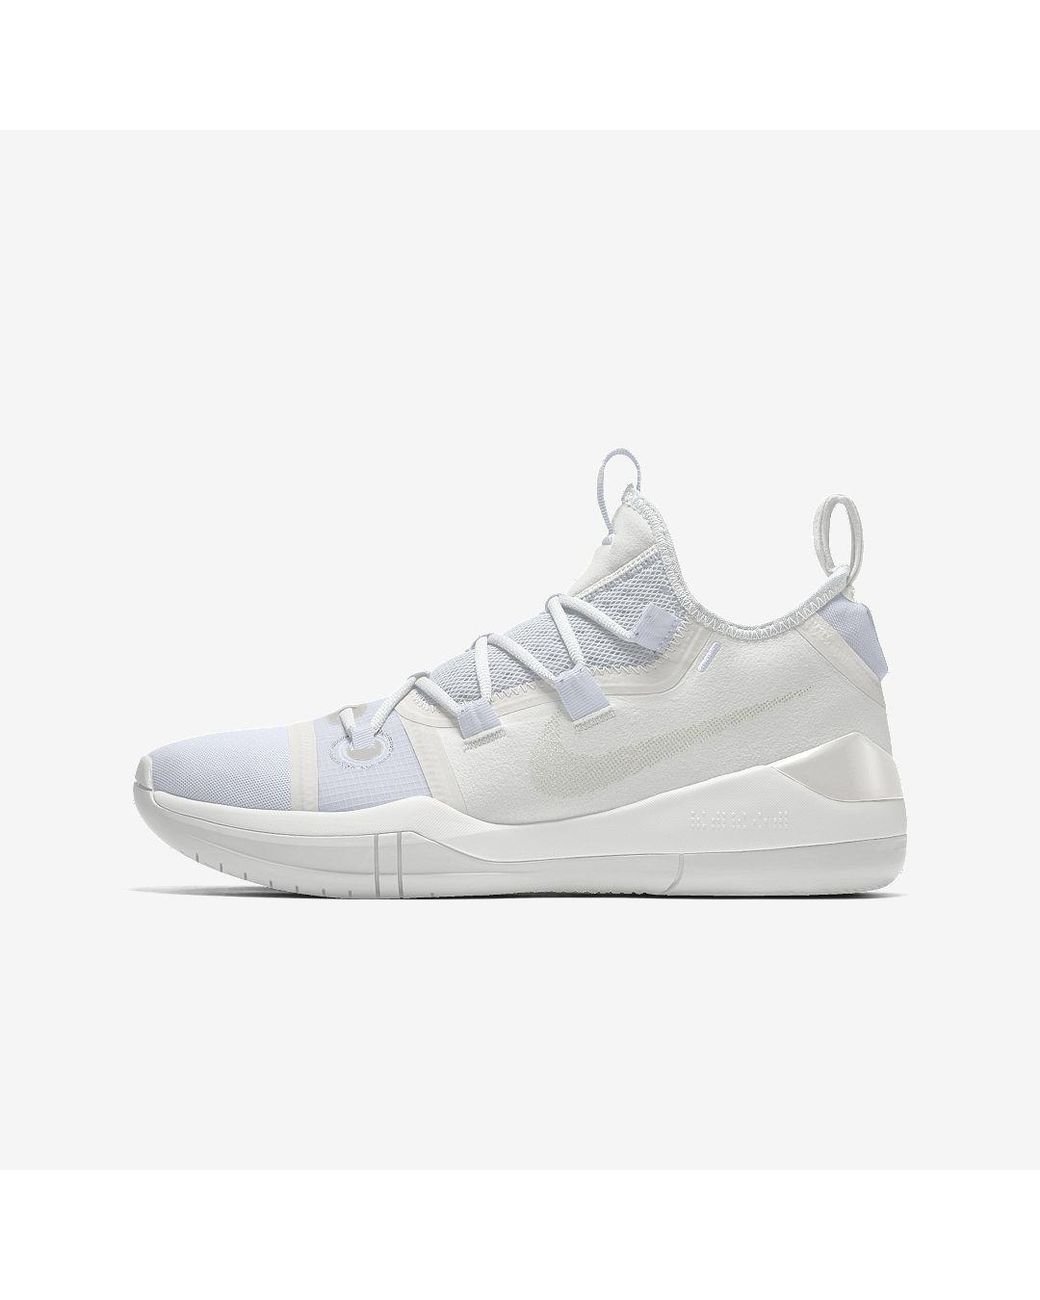 Nike Kobe A.d. By You Custom Basketball Shoe in White for Men | Lyst